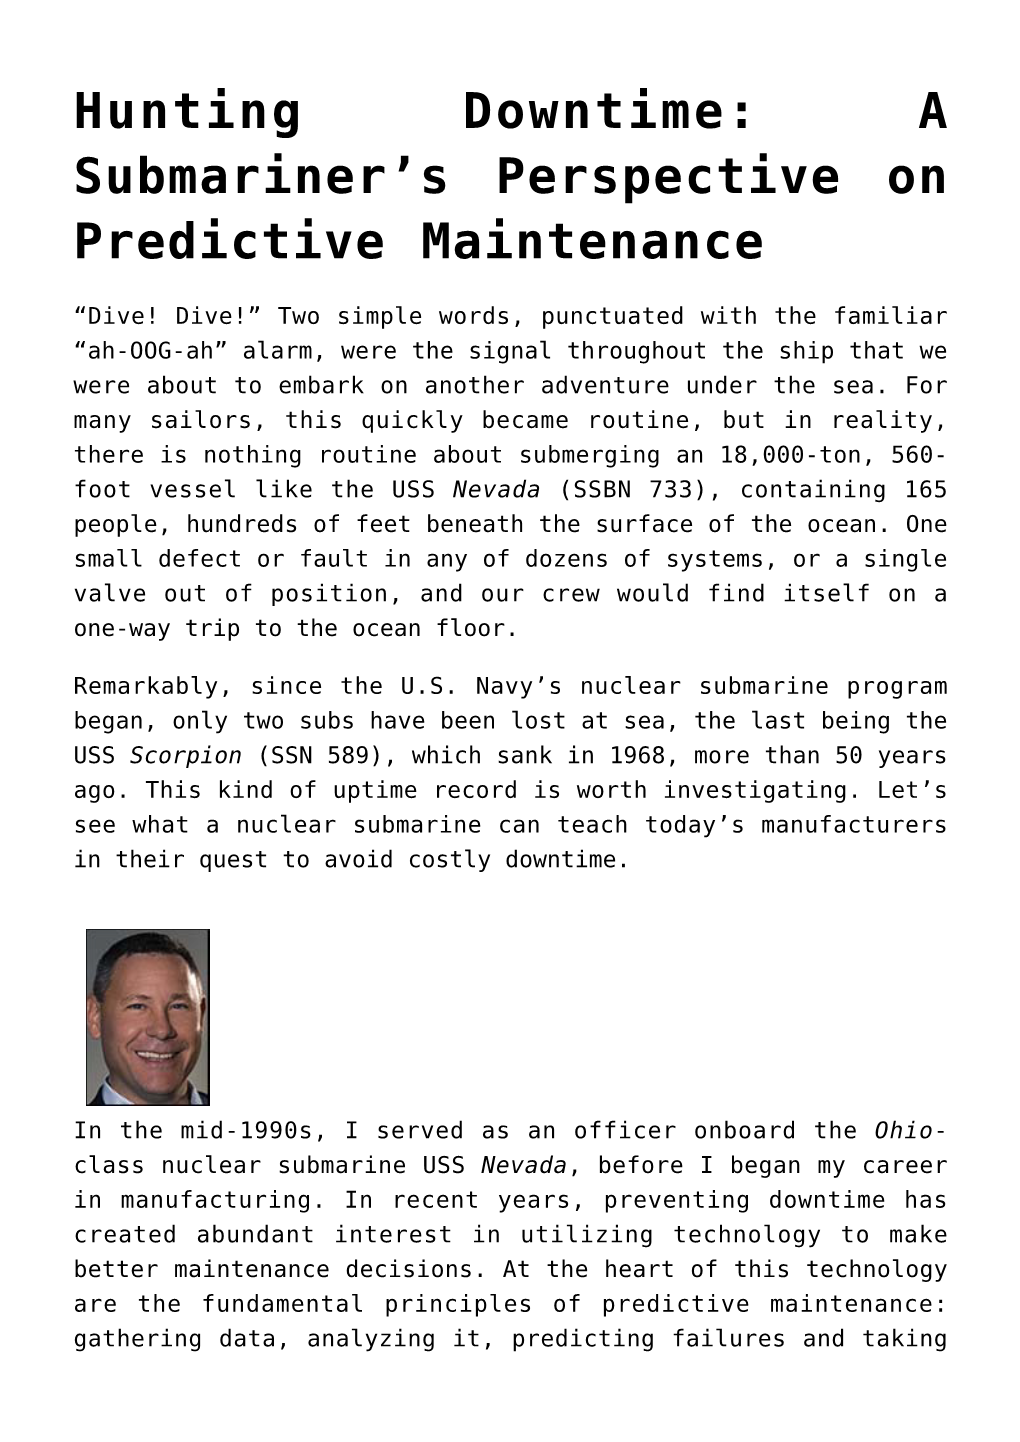 S Perspective on Predictive Maintenance